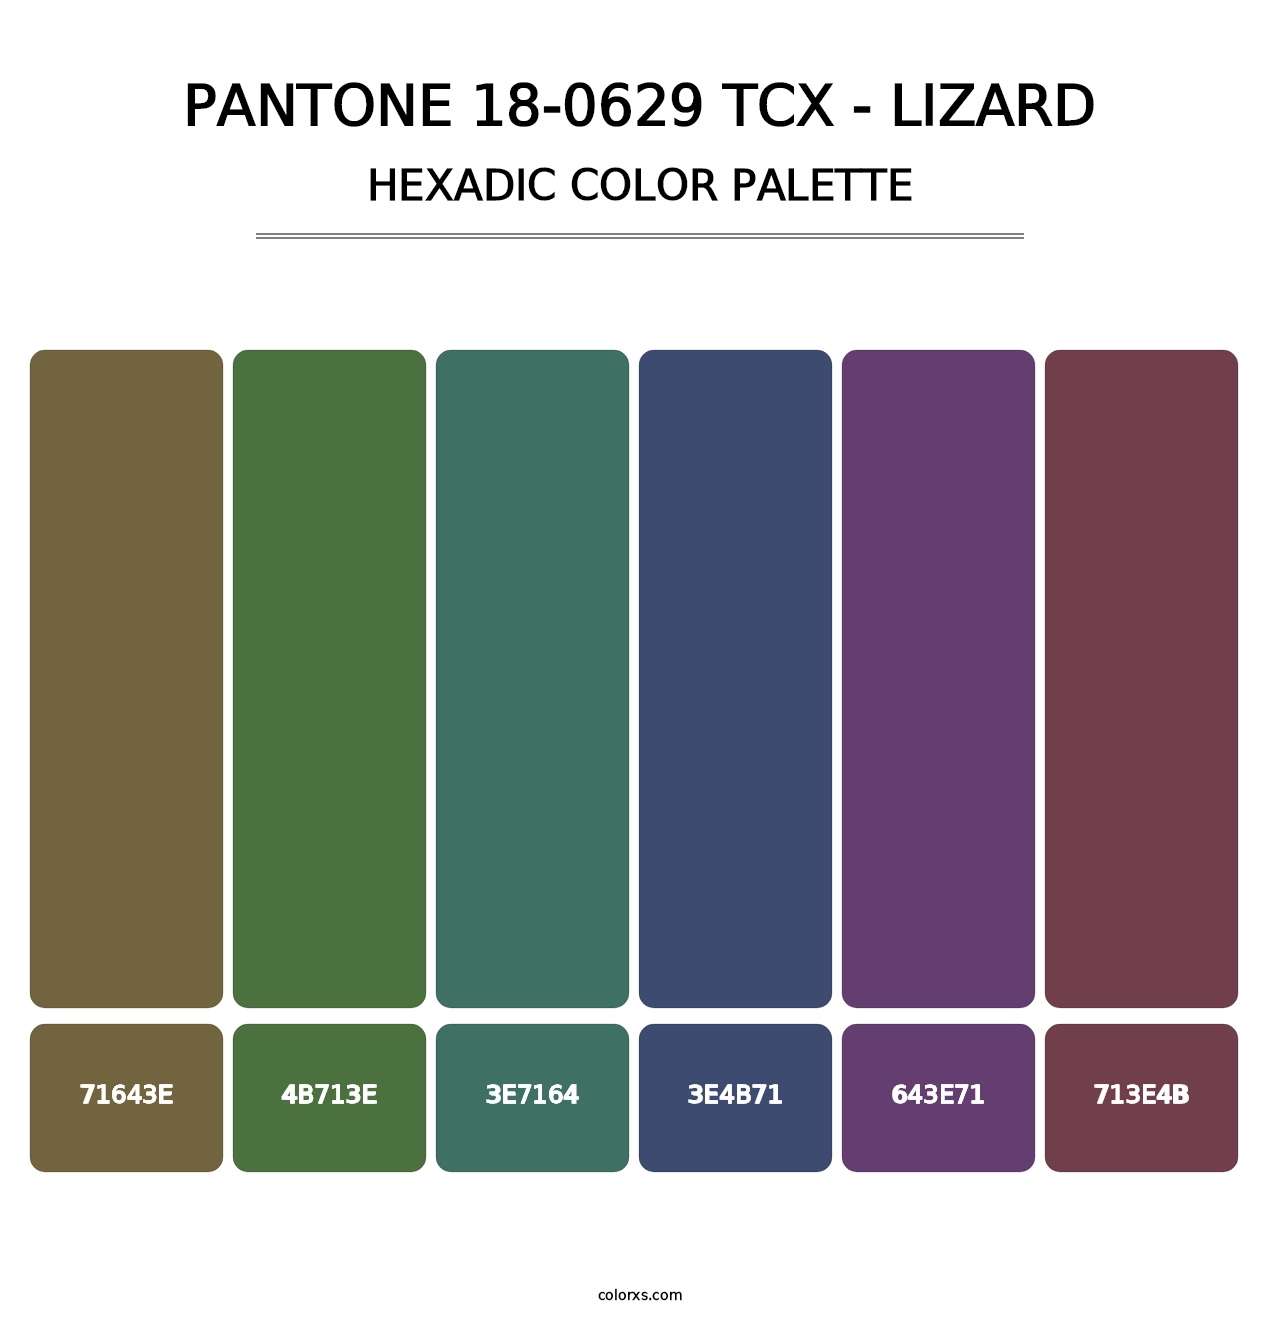 PANTONE 18-0629 TCX - Lizard - Hexadic Color Palette